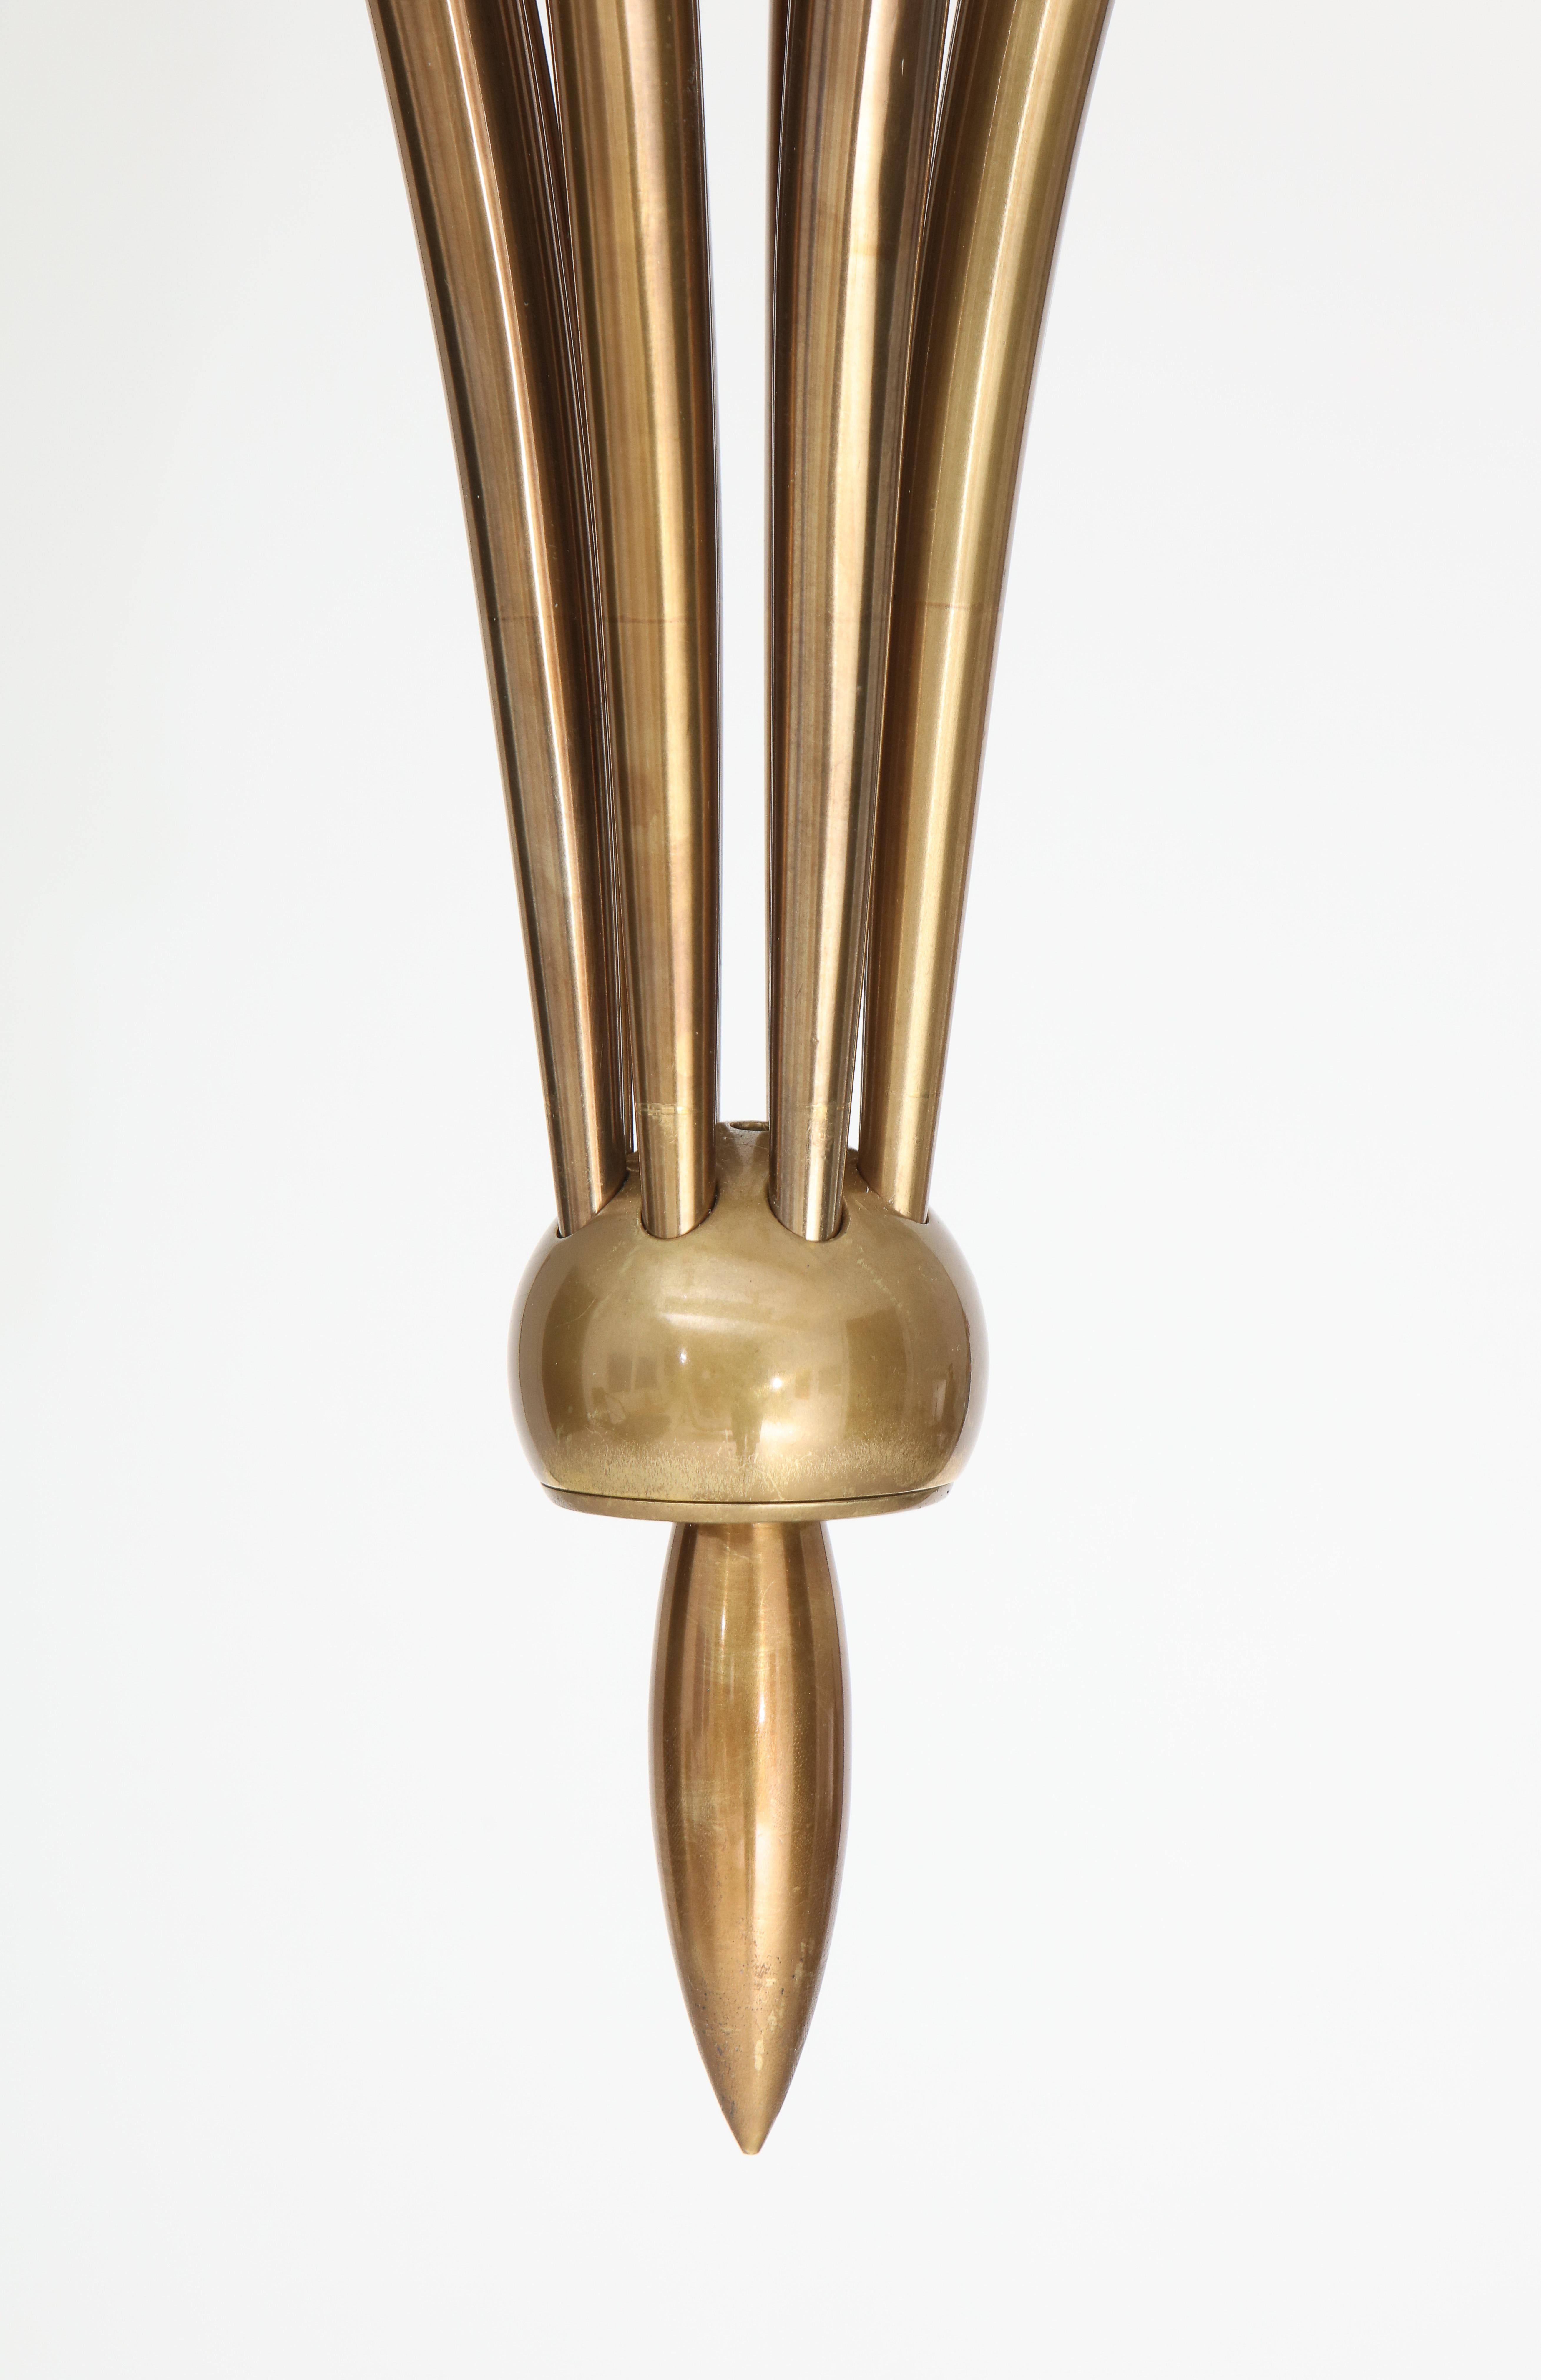 Guglielmo Ulrich Rare Eight-Arm Brass Chandelier, Italy, 1940s For Sale 4